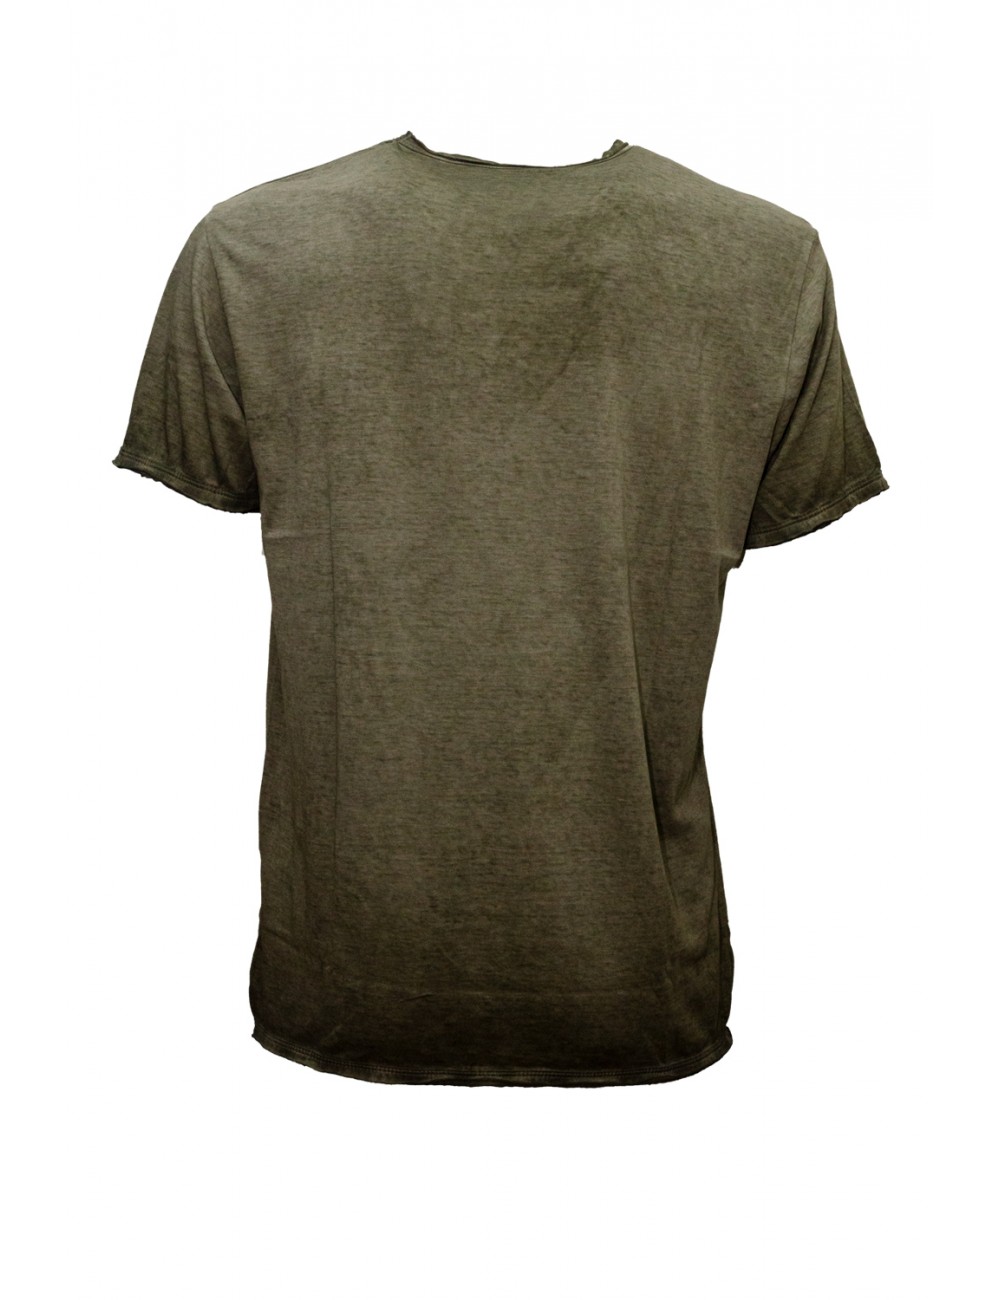 t-shirt censured UOMO VERDE MILITARE - TM 2400 T JSEP 395F vista frontale